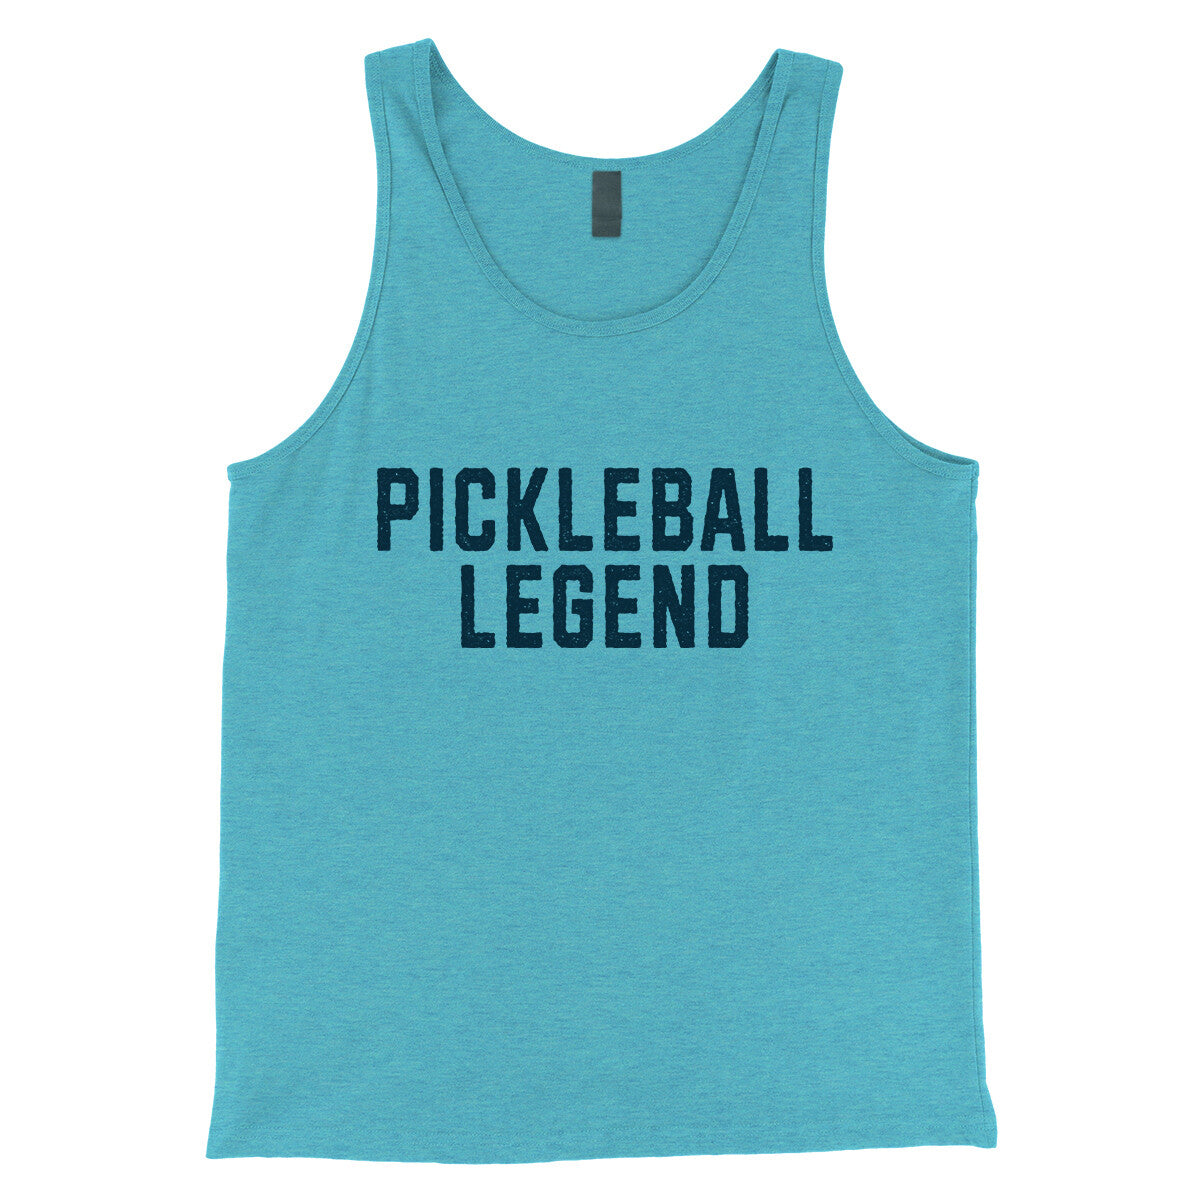 Pickleball Legend in Aqua Triblend Color